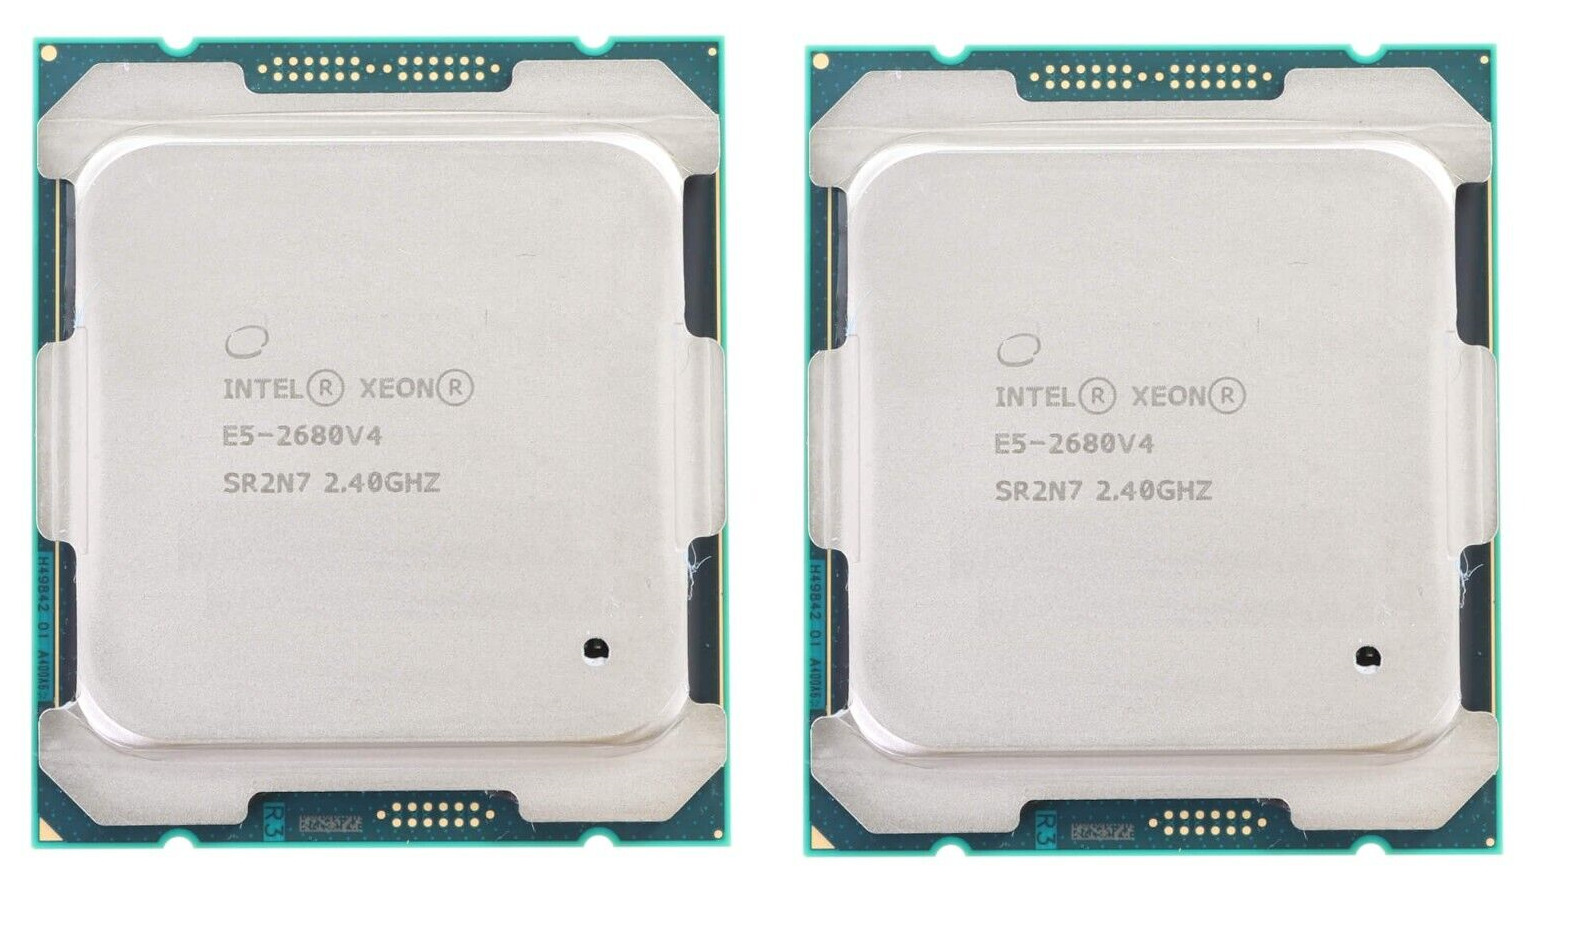 Matched Pair 2x Intel Xeon CPU e5-2680v4 CPU SR2N7 14 Cor 12x 2.4GHz Processor